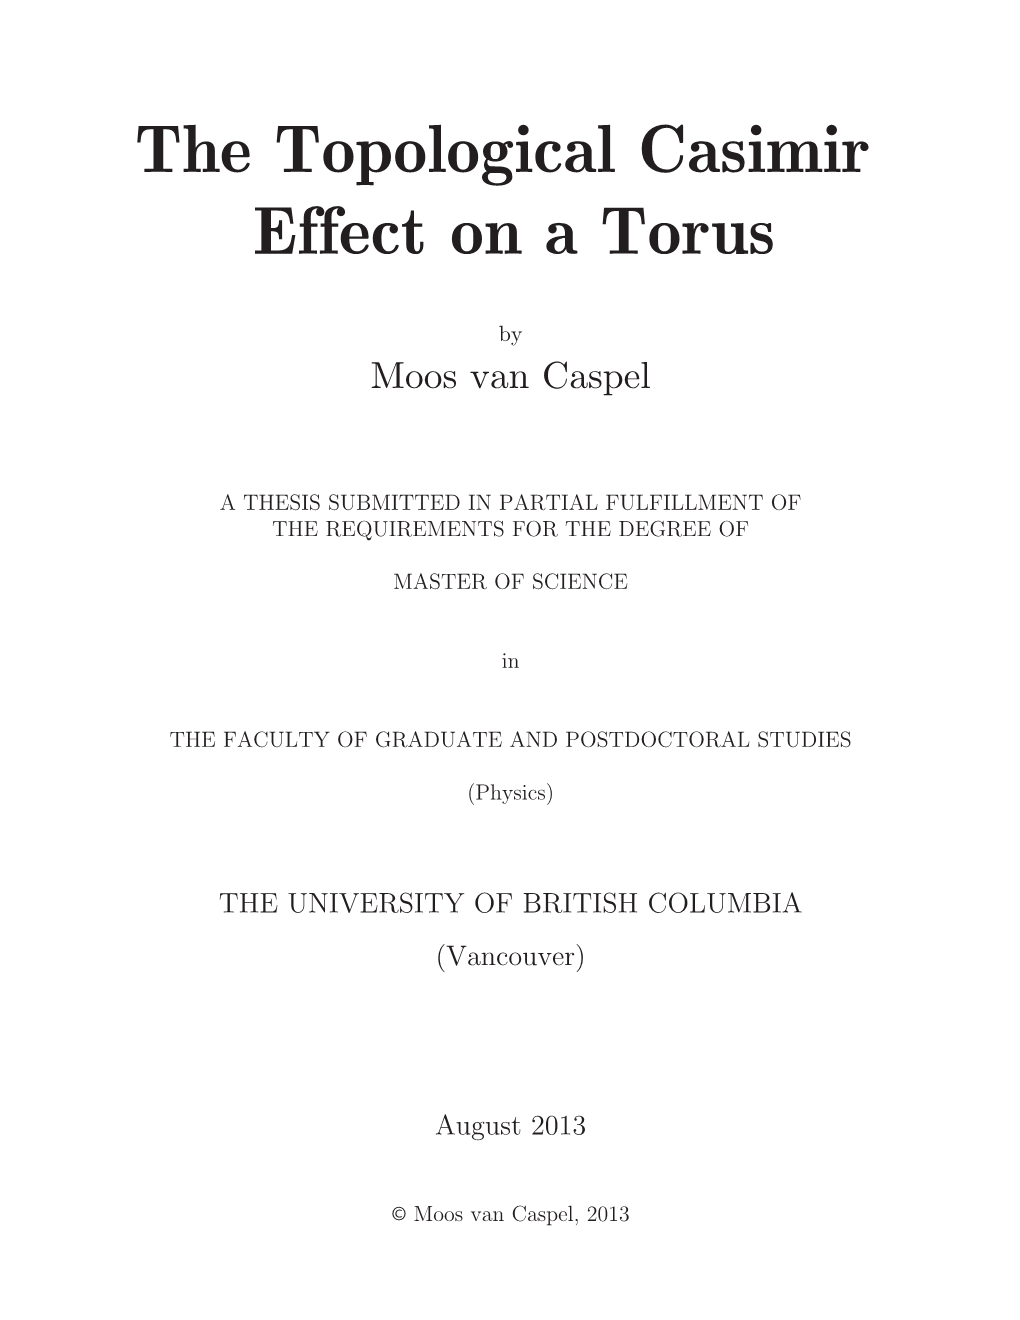 The Topological Casimir Effect on a Torus